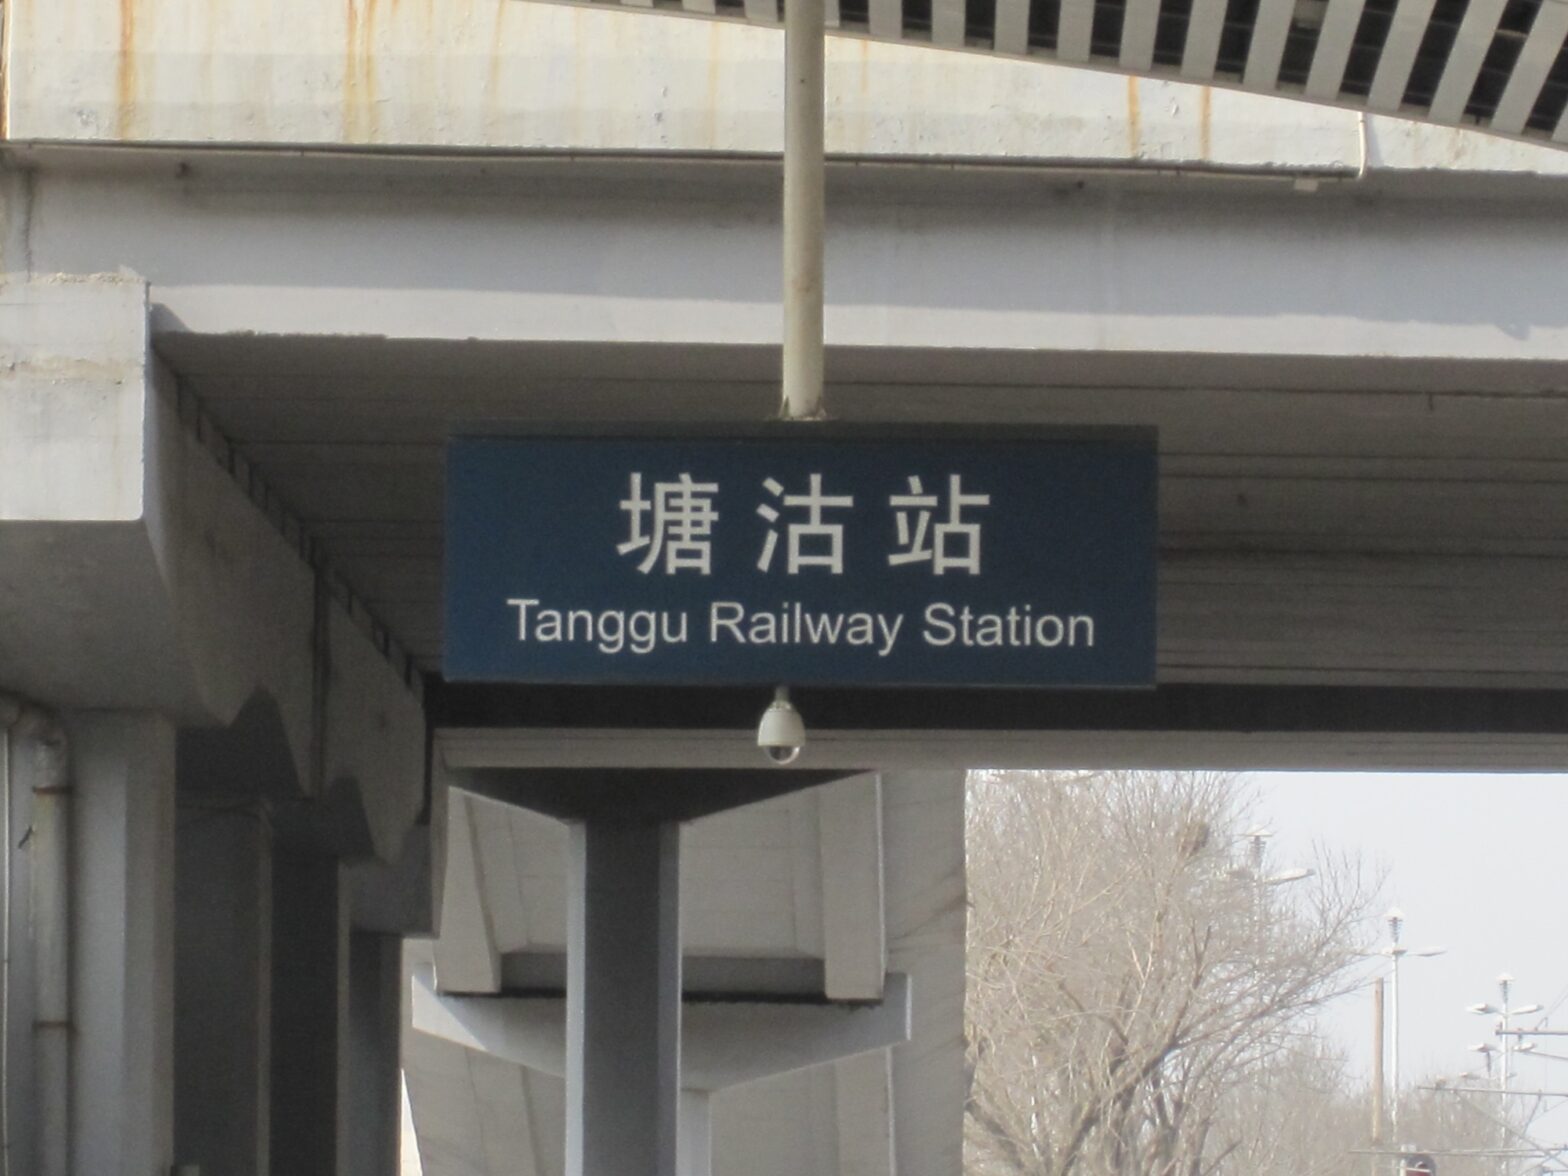 An image of a station sign at Tanggu railway station